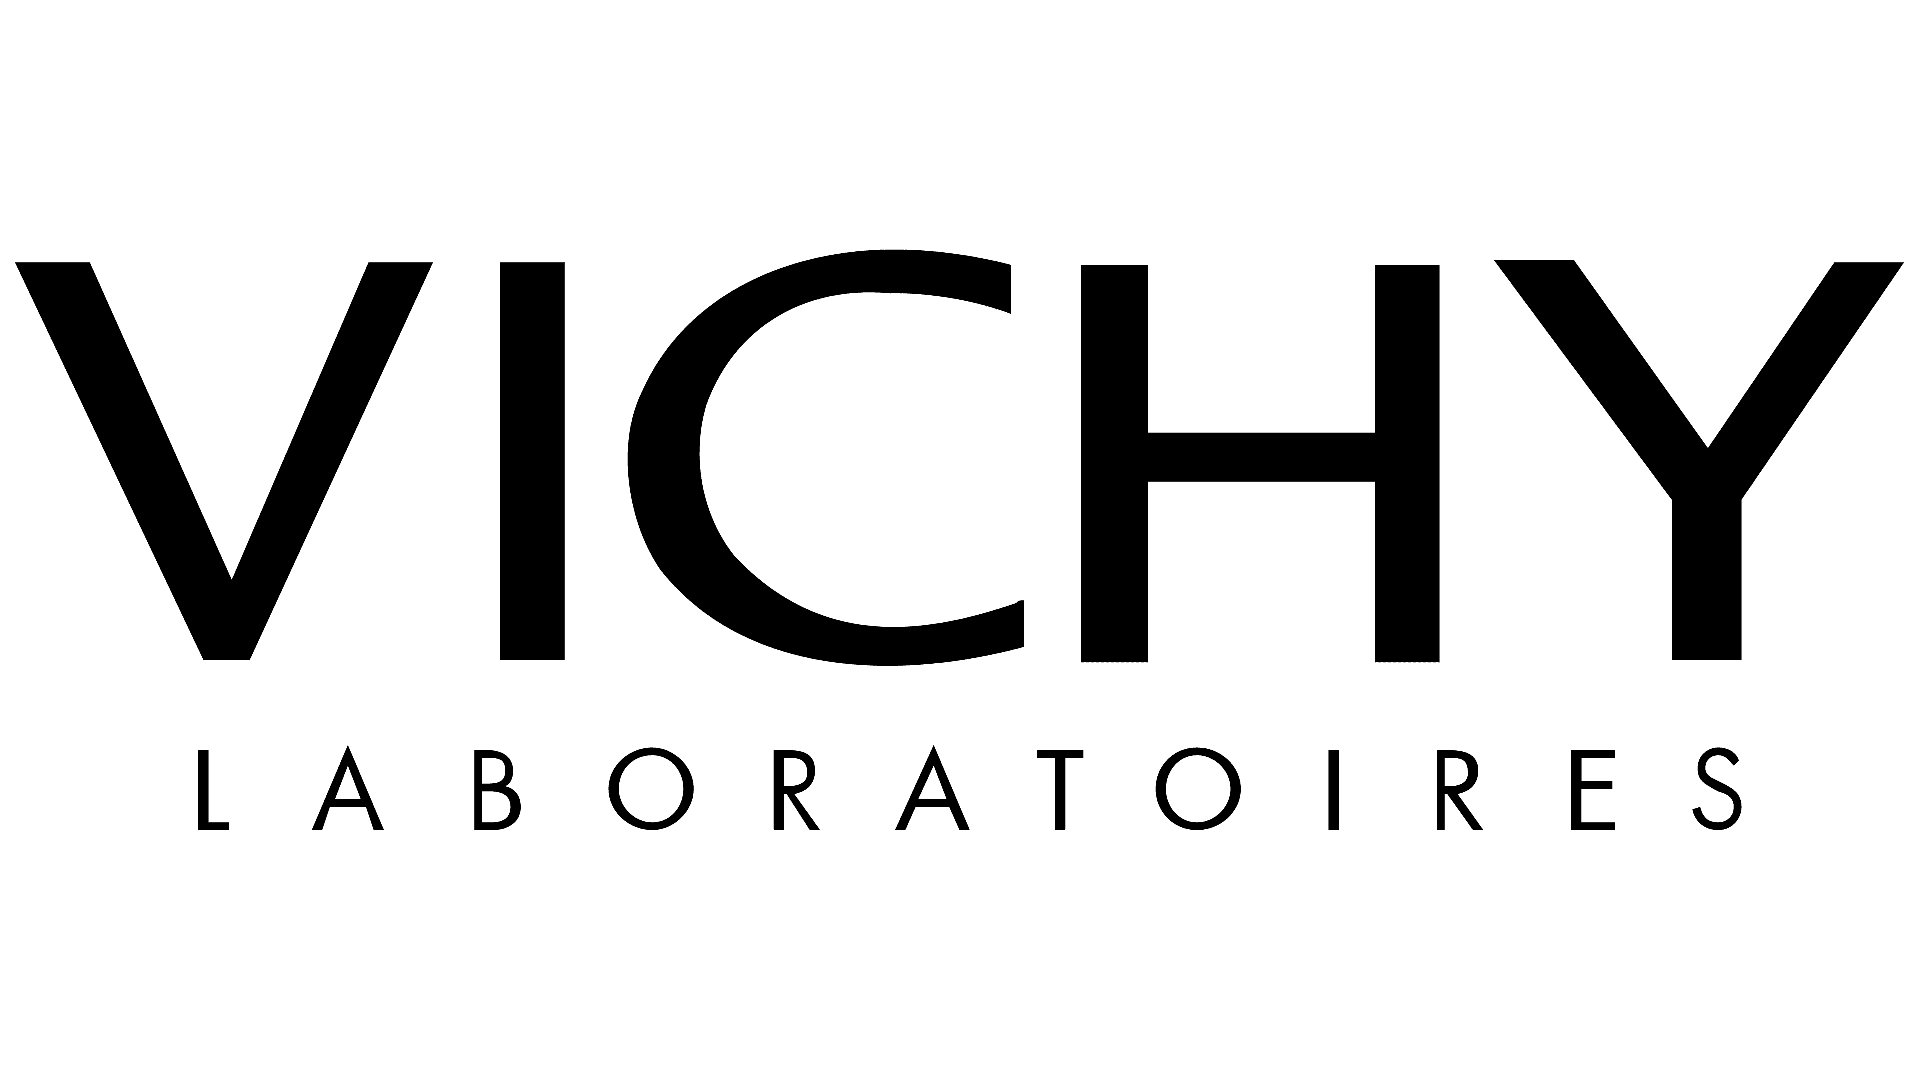 Brand: Vichy